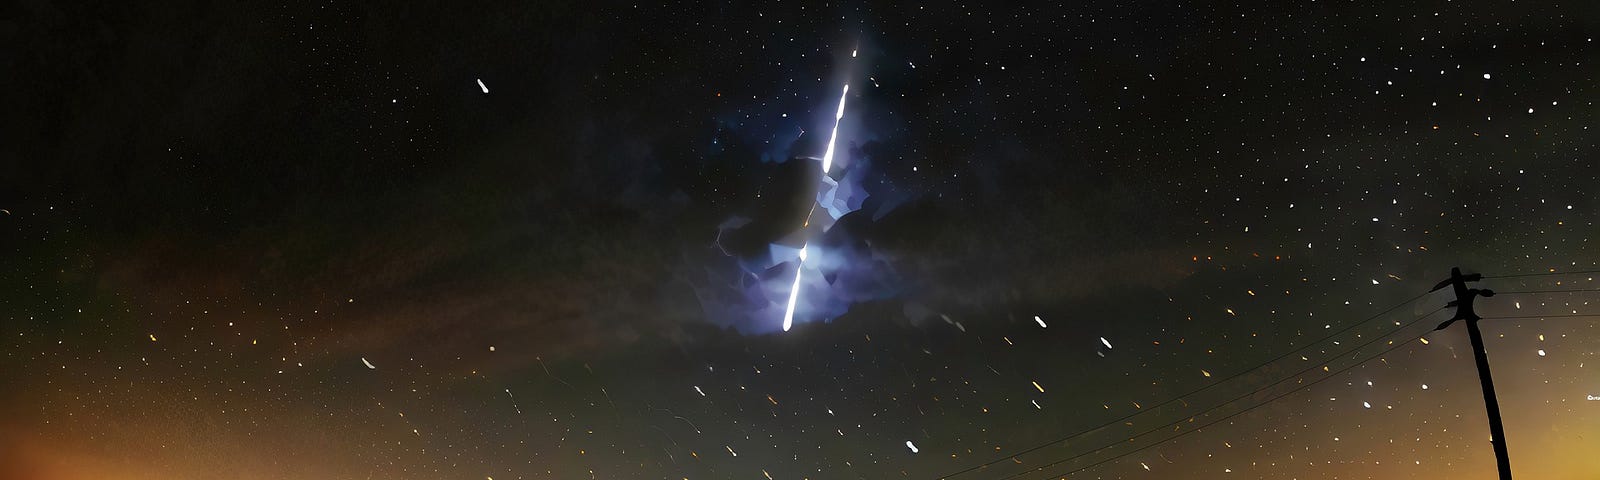 meteor shooting in the night sky